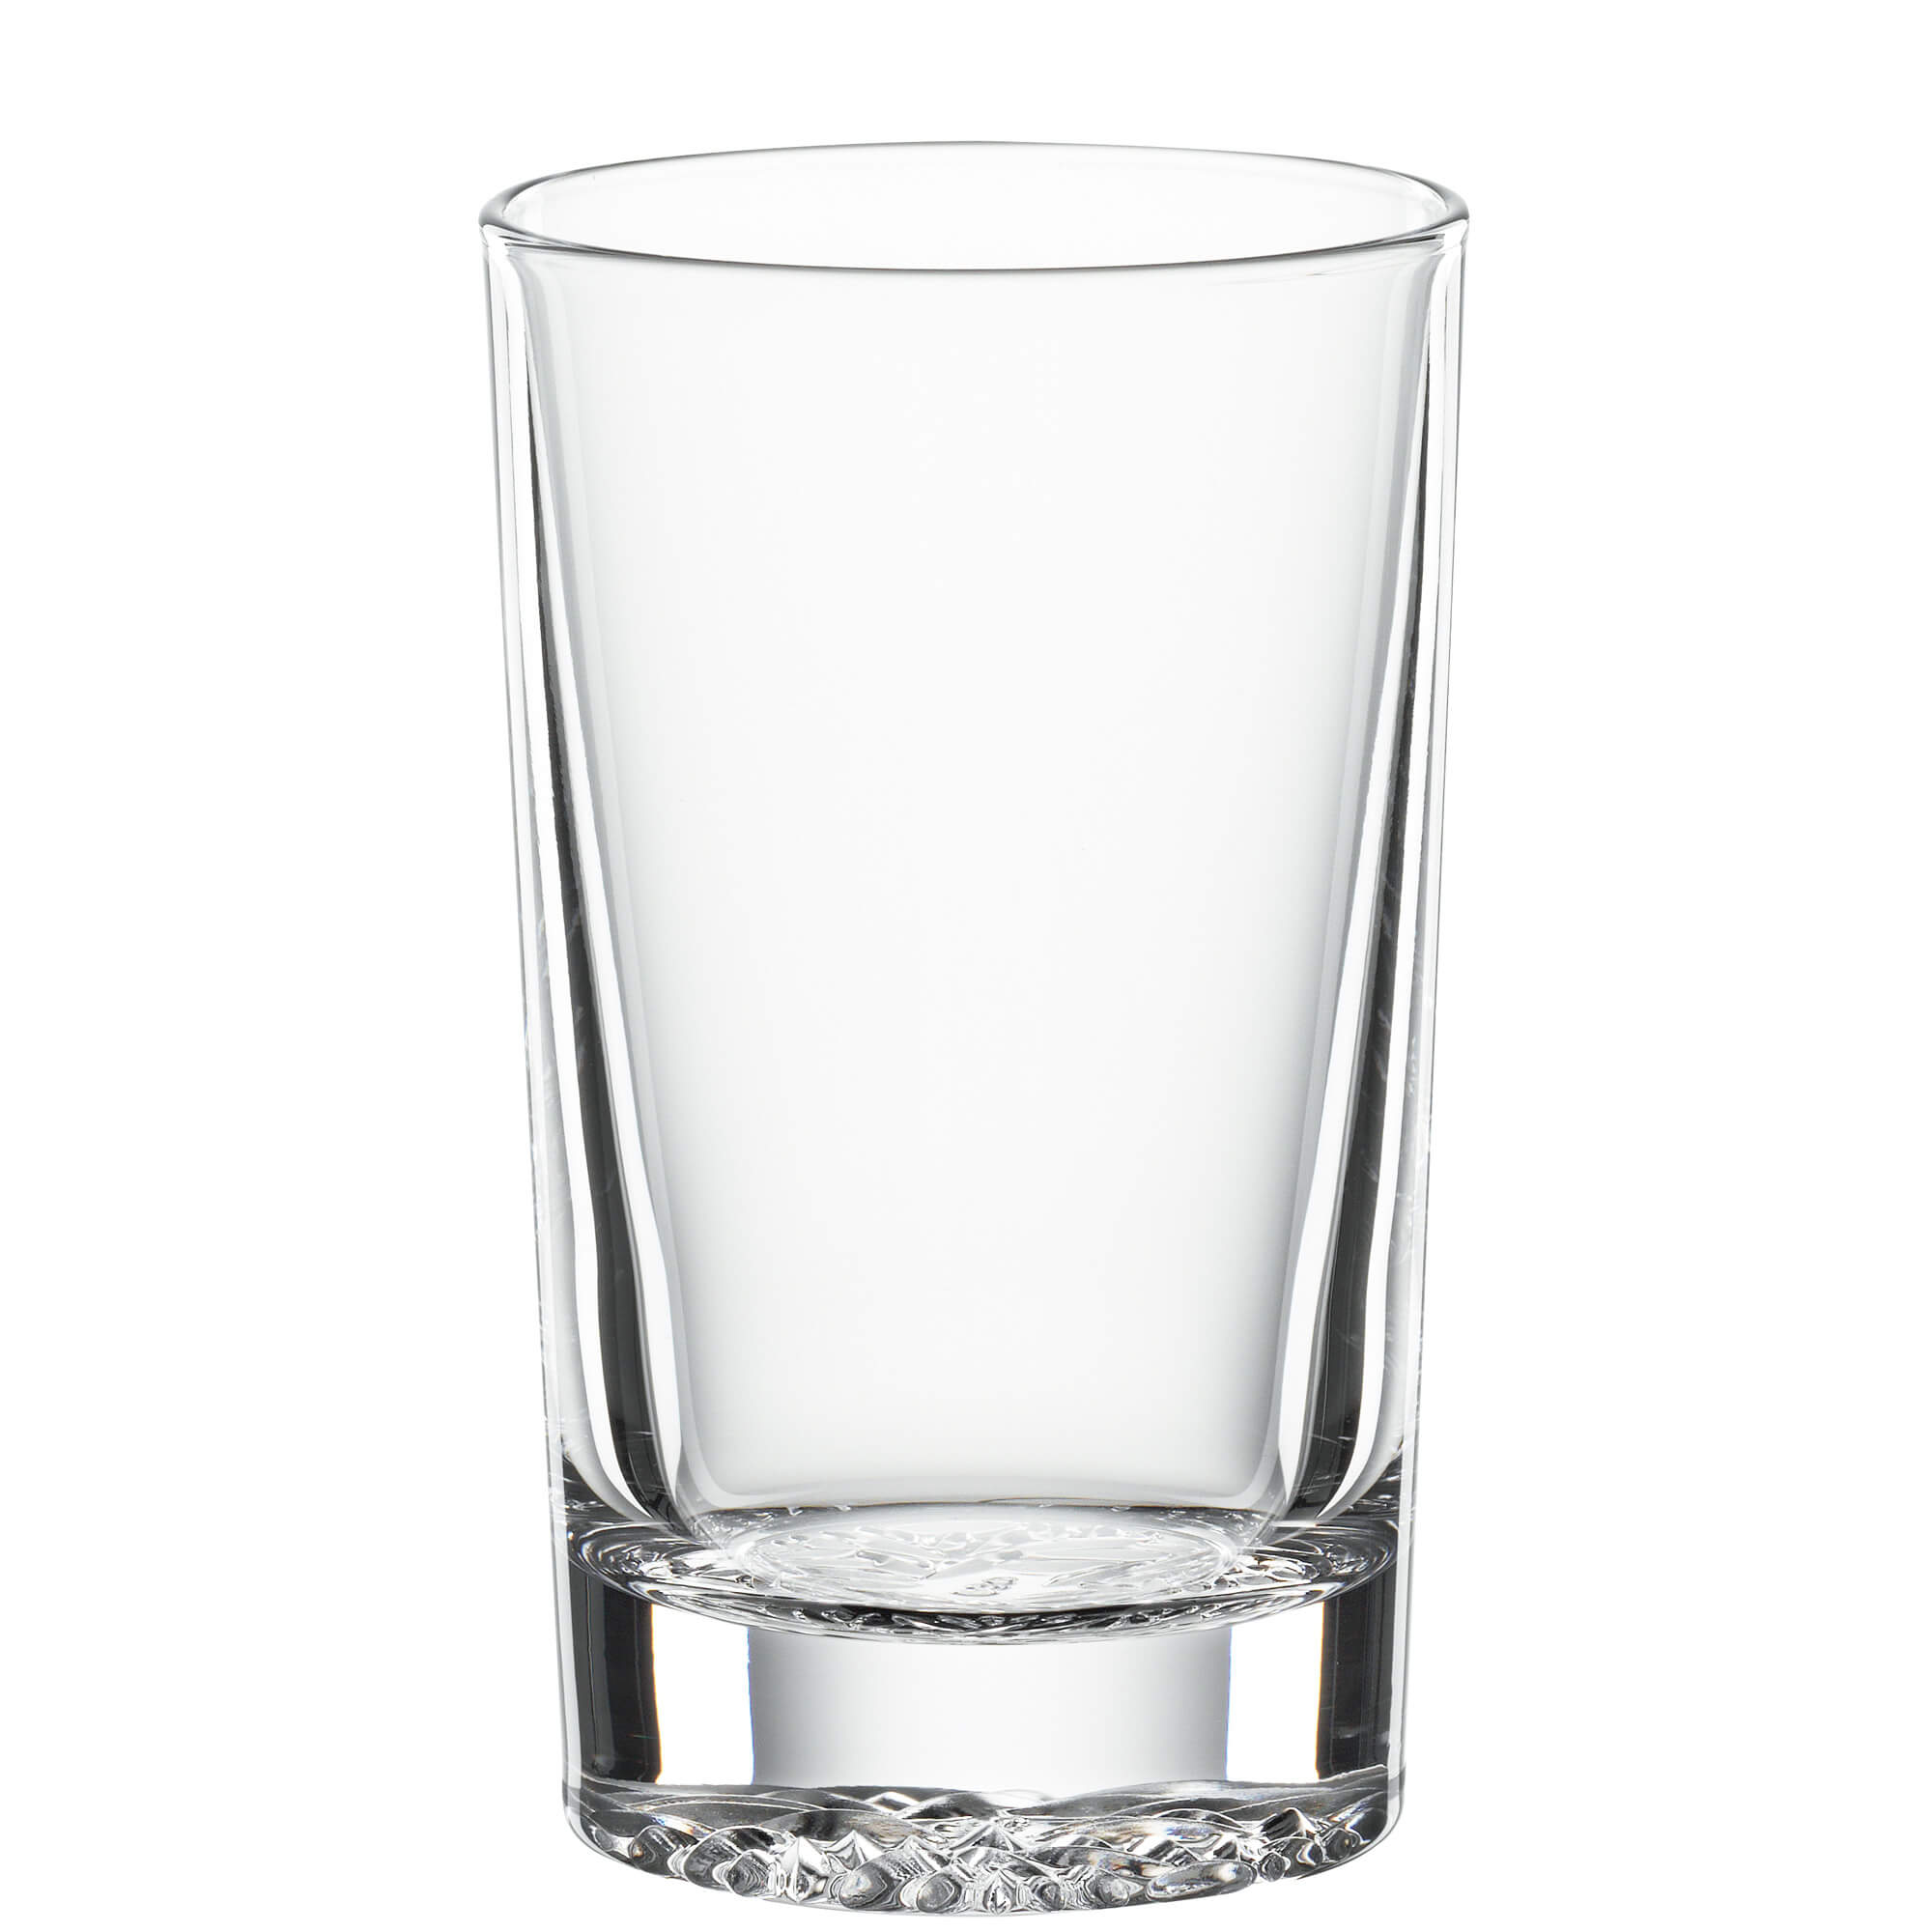 Softdrink glass Lounge 2.0, Spiegelau - 247ml (1 pc.)